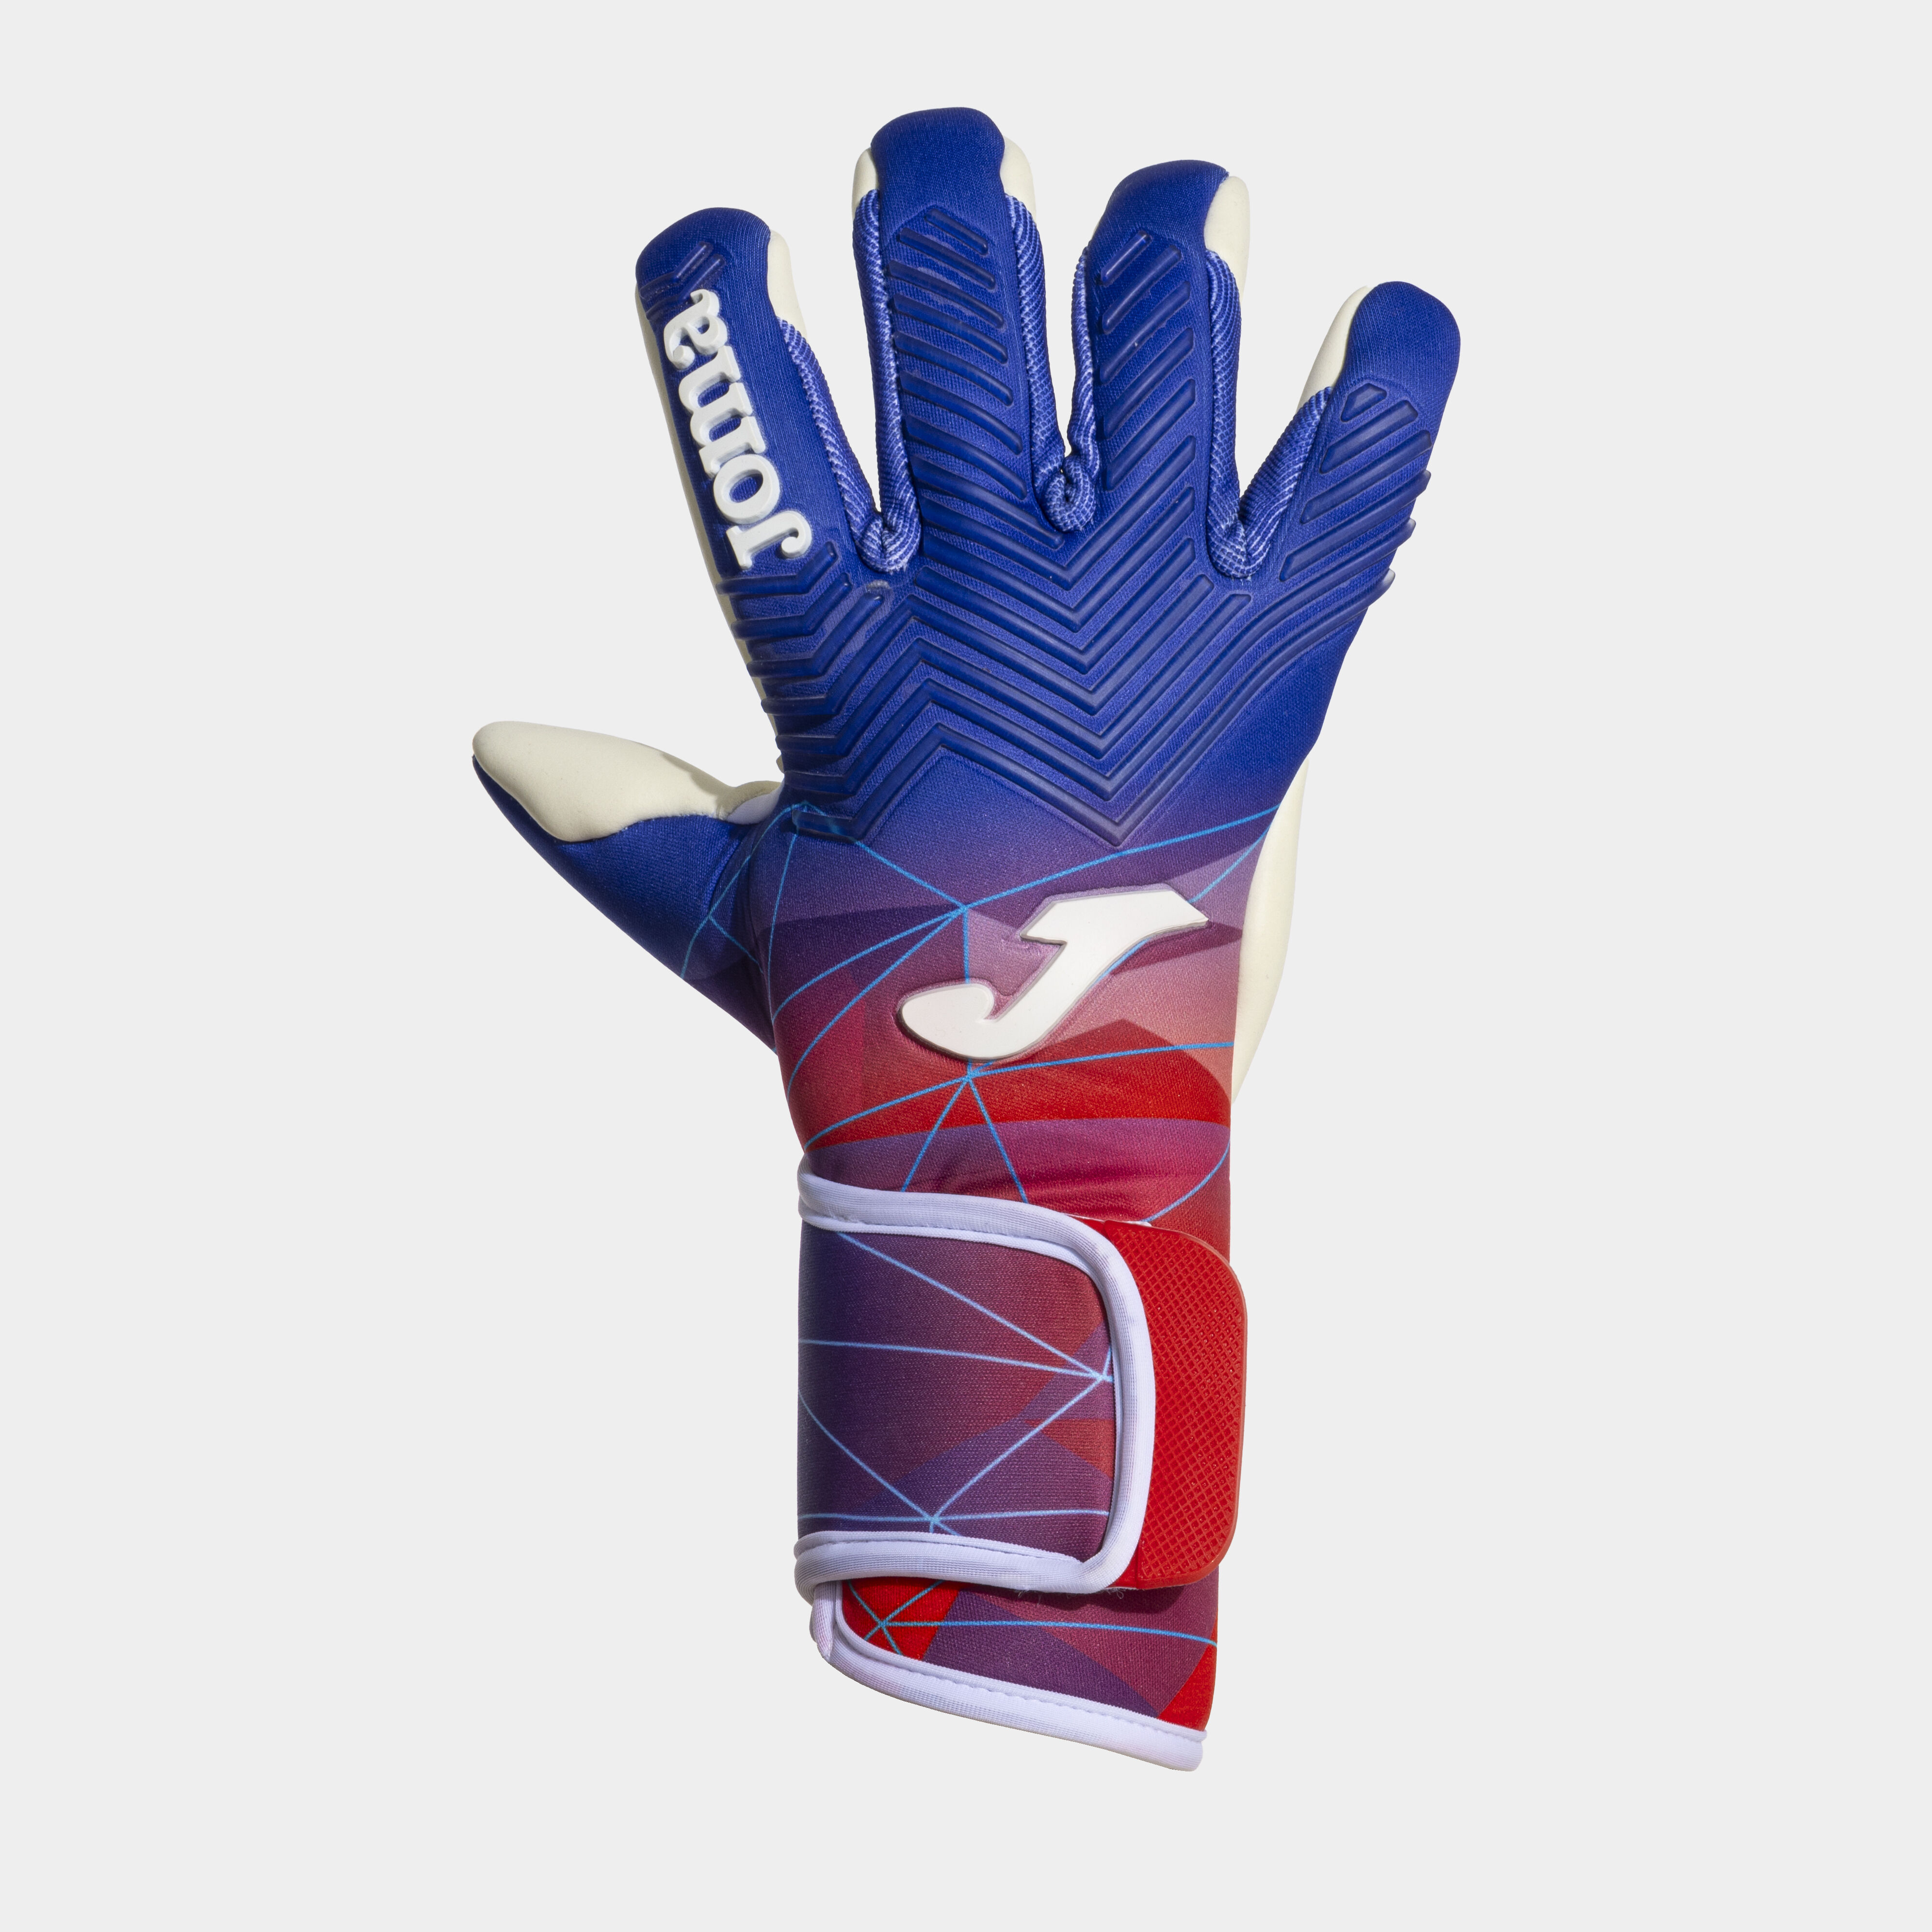 Football goalkeeper gloves Area 24 red navy blue